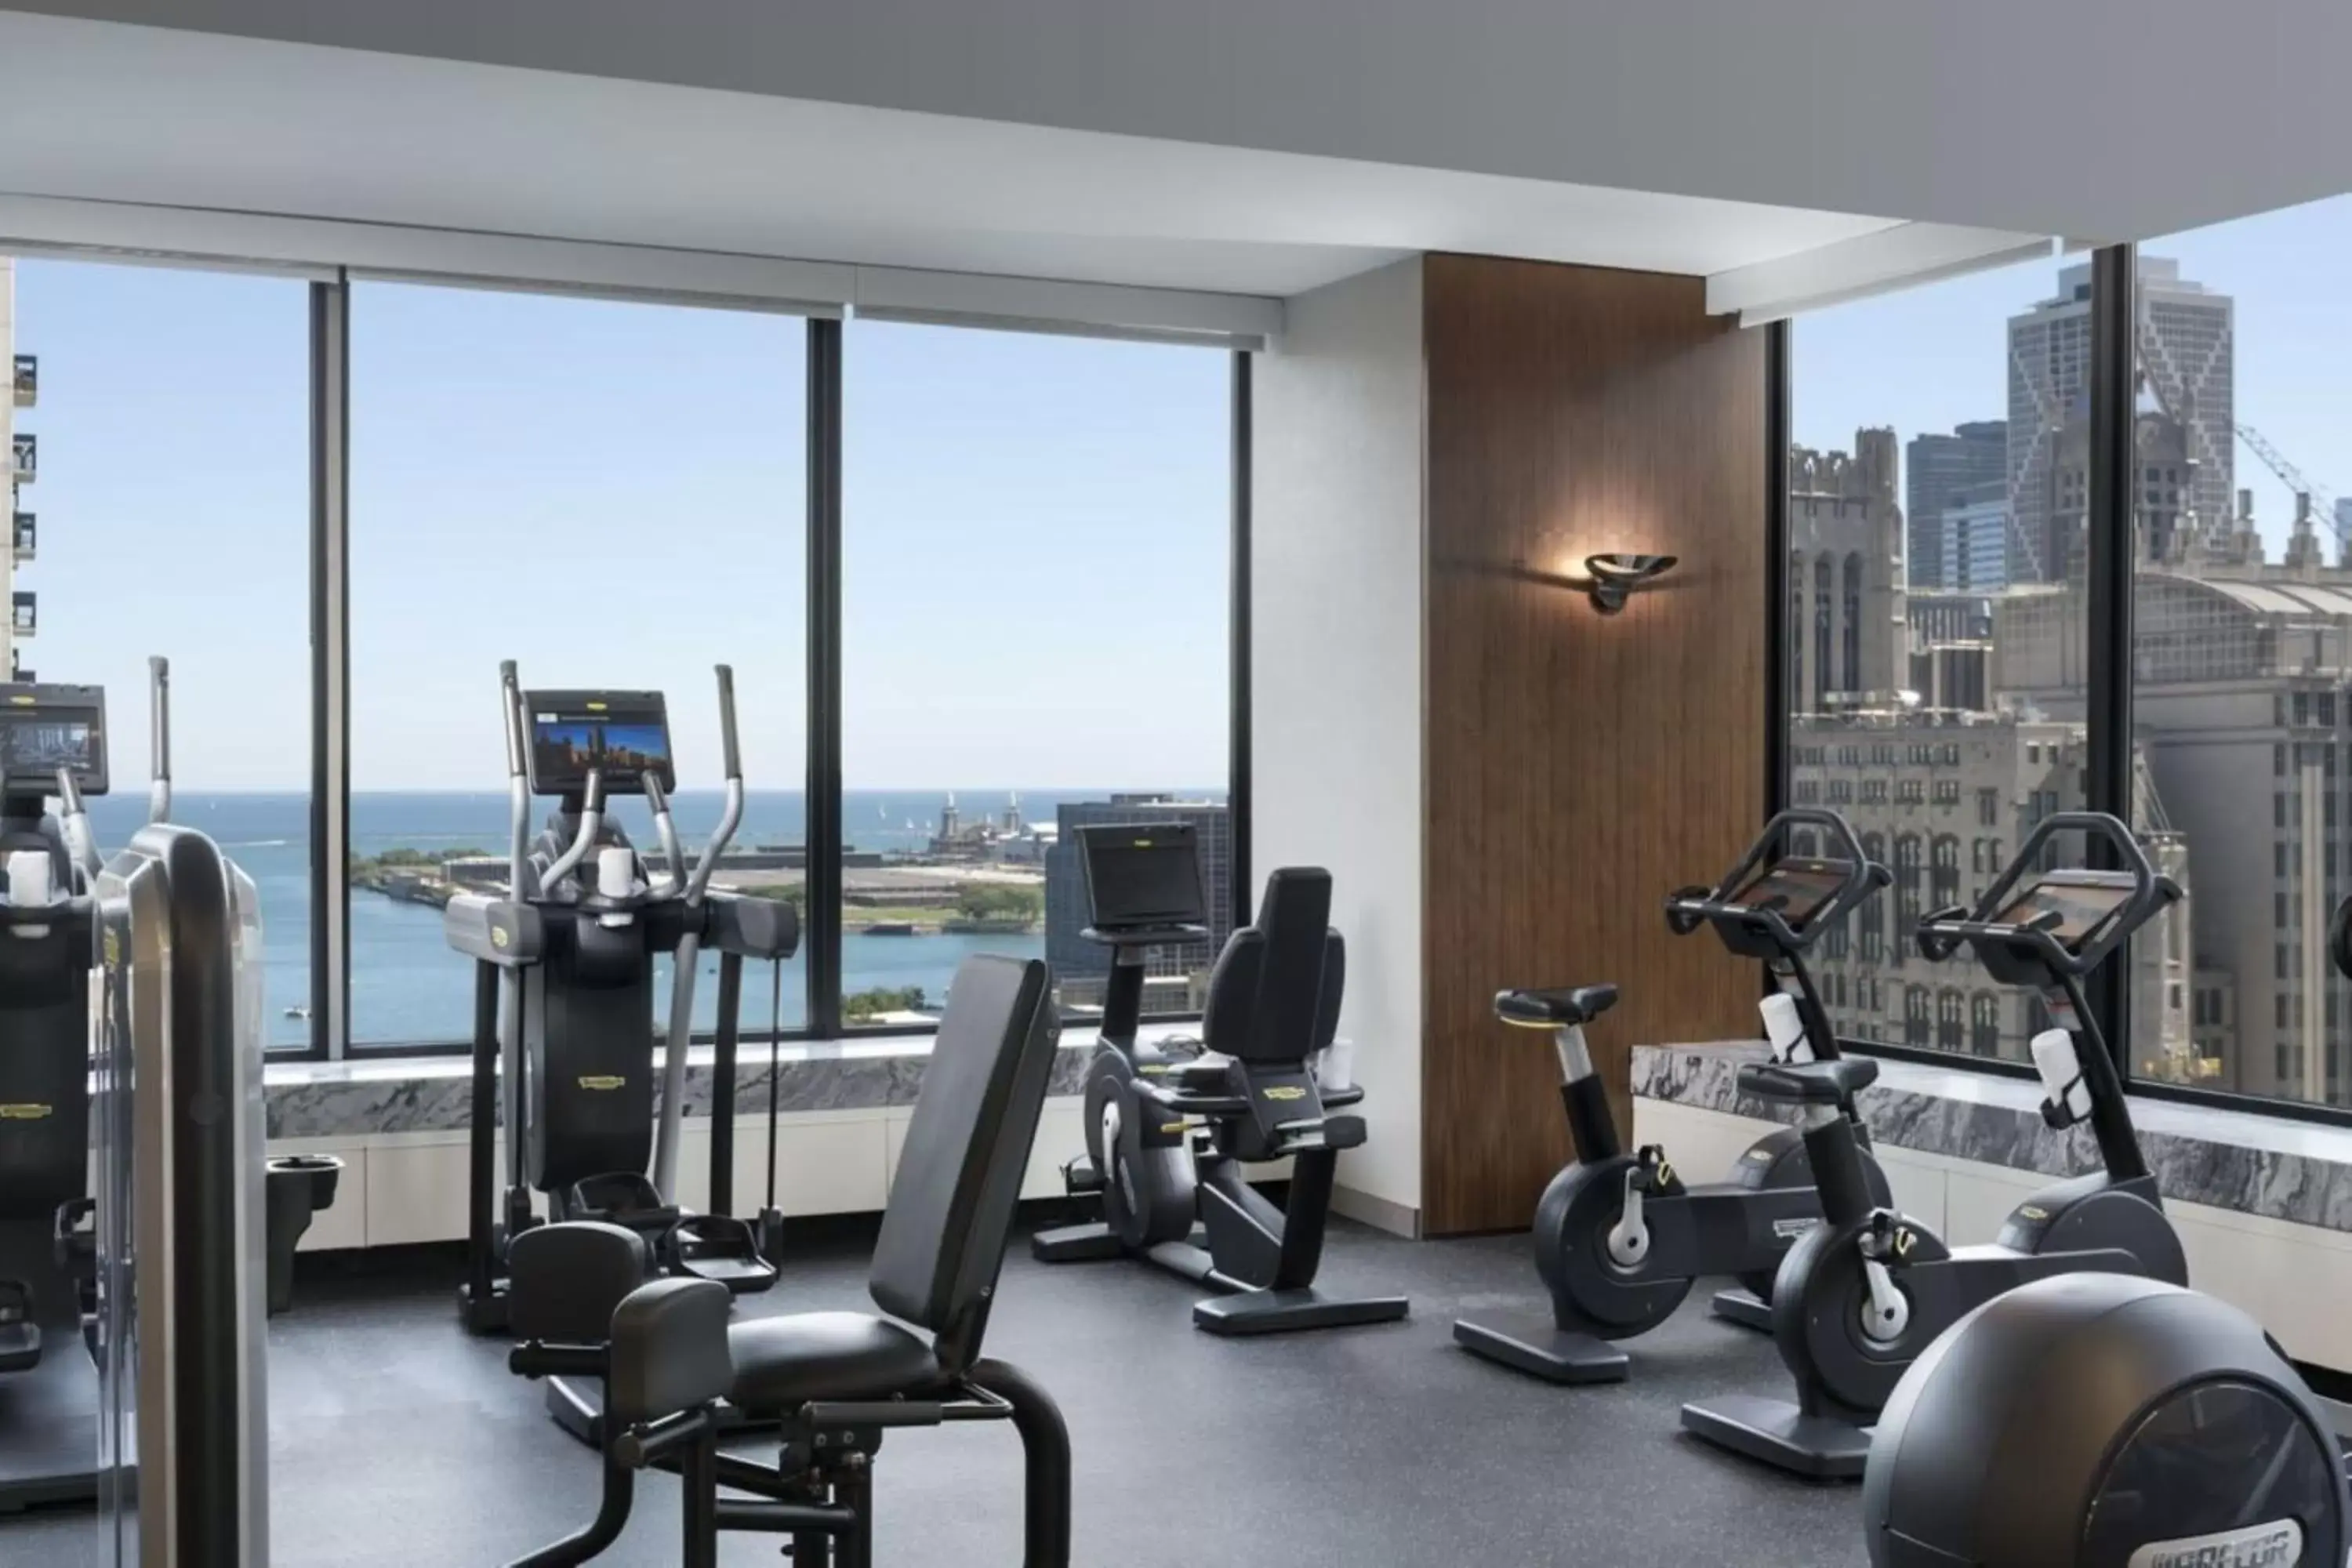 Fitness centre/facilities, Fitness Center/Facilities in The Ritz-Carlton, Chicago